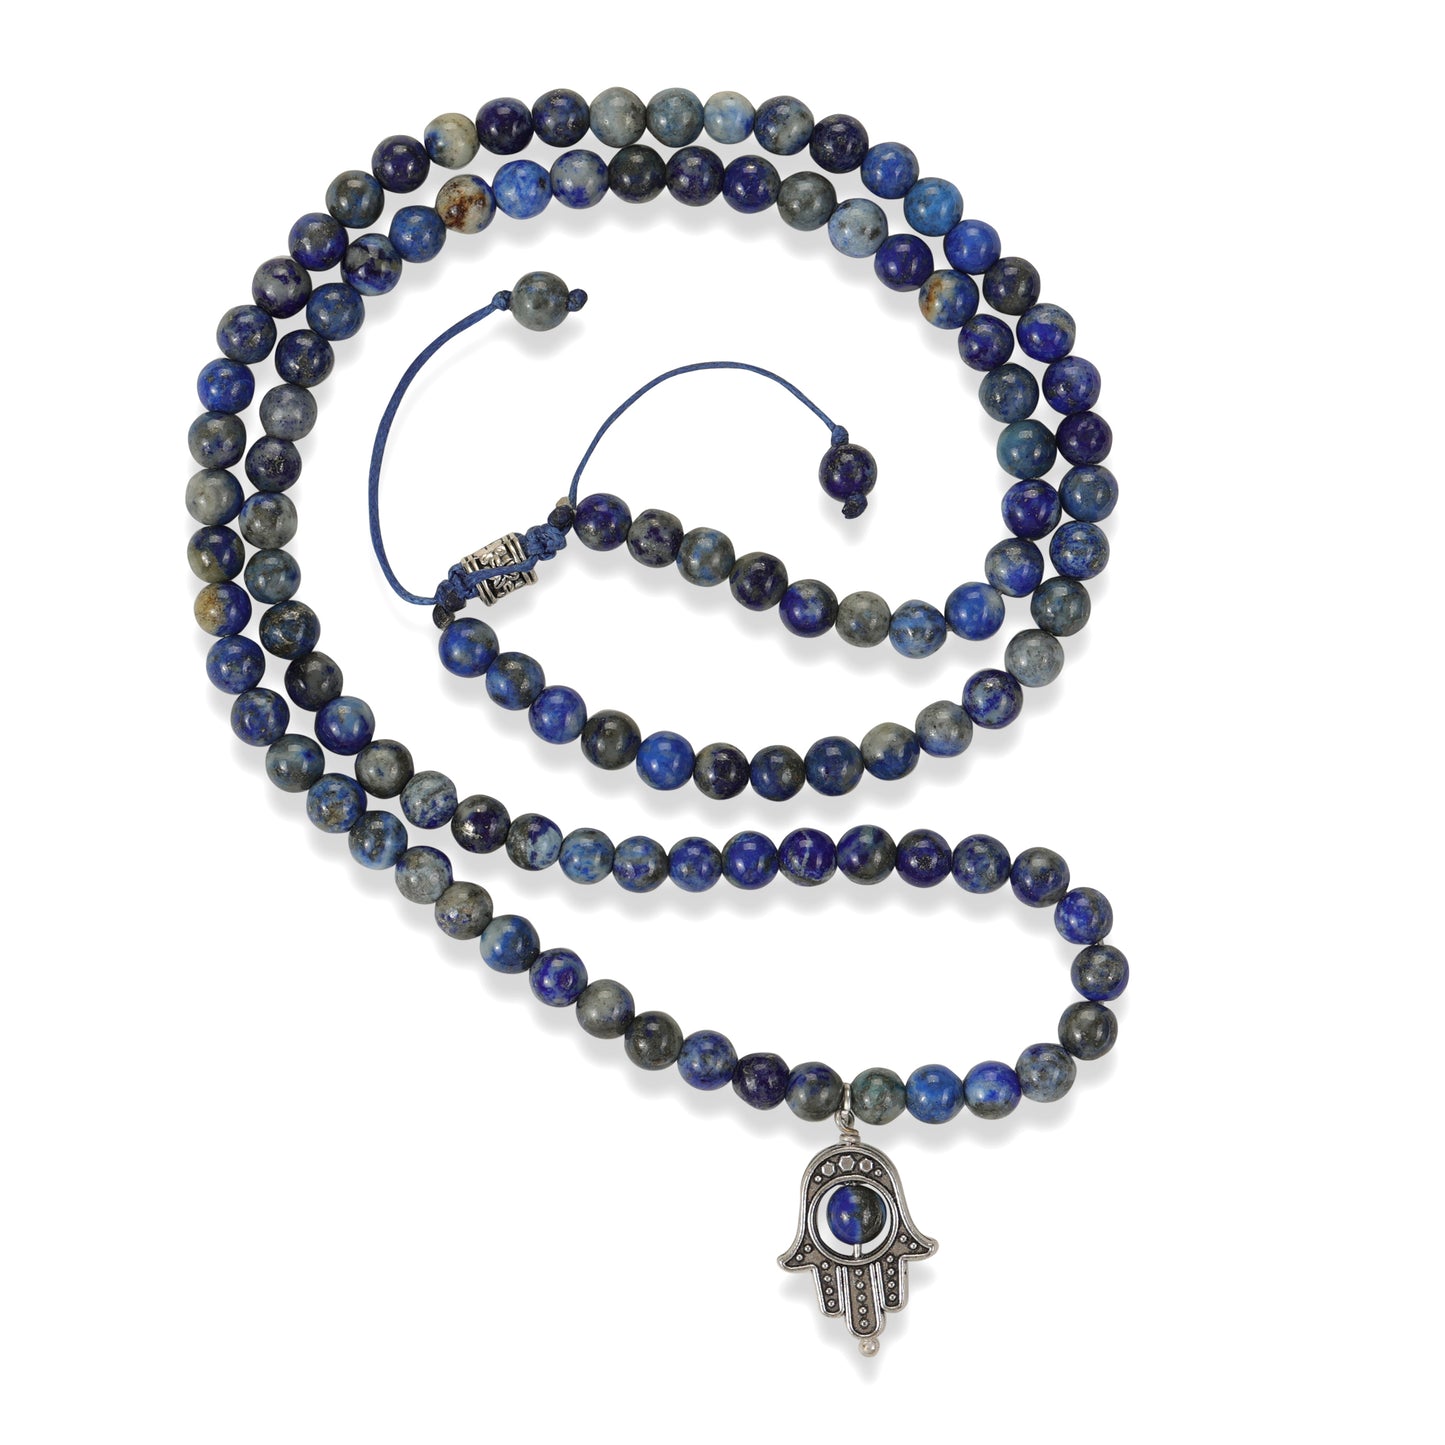 Lapis Lazuli 108 Beads Mala - Stone of Knowledge